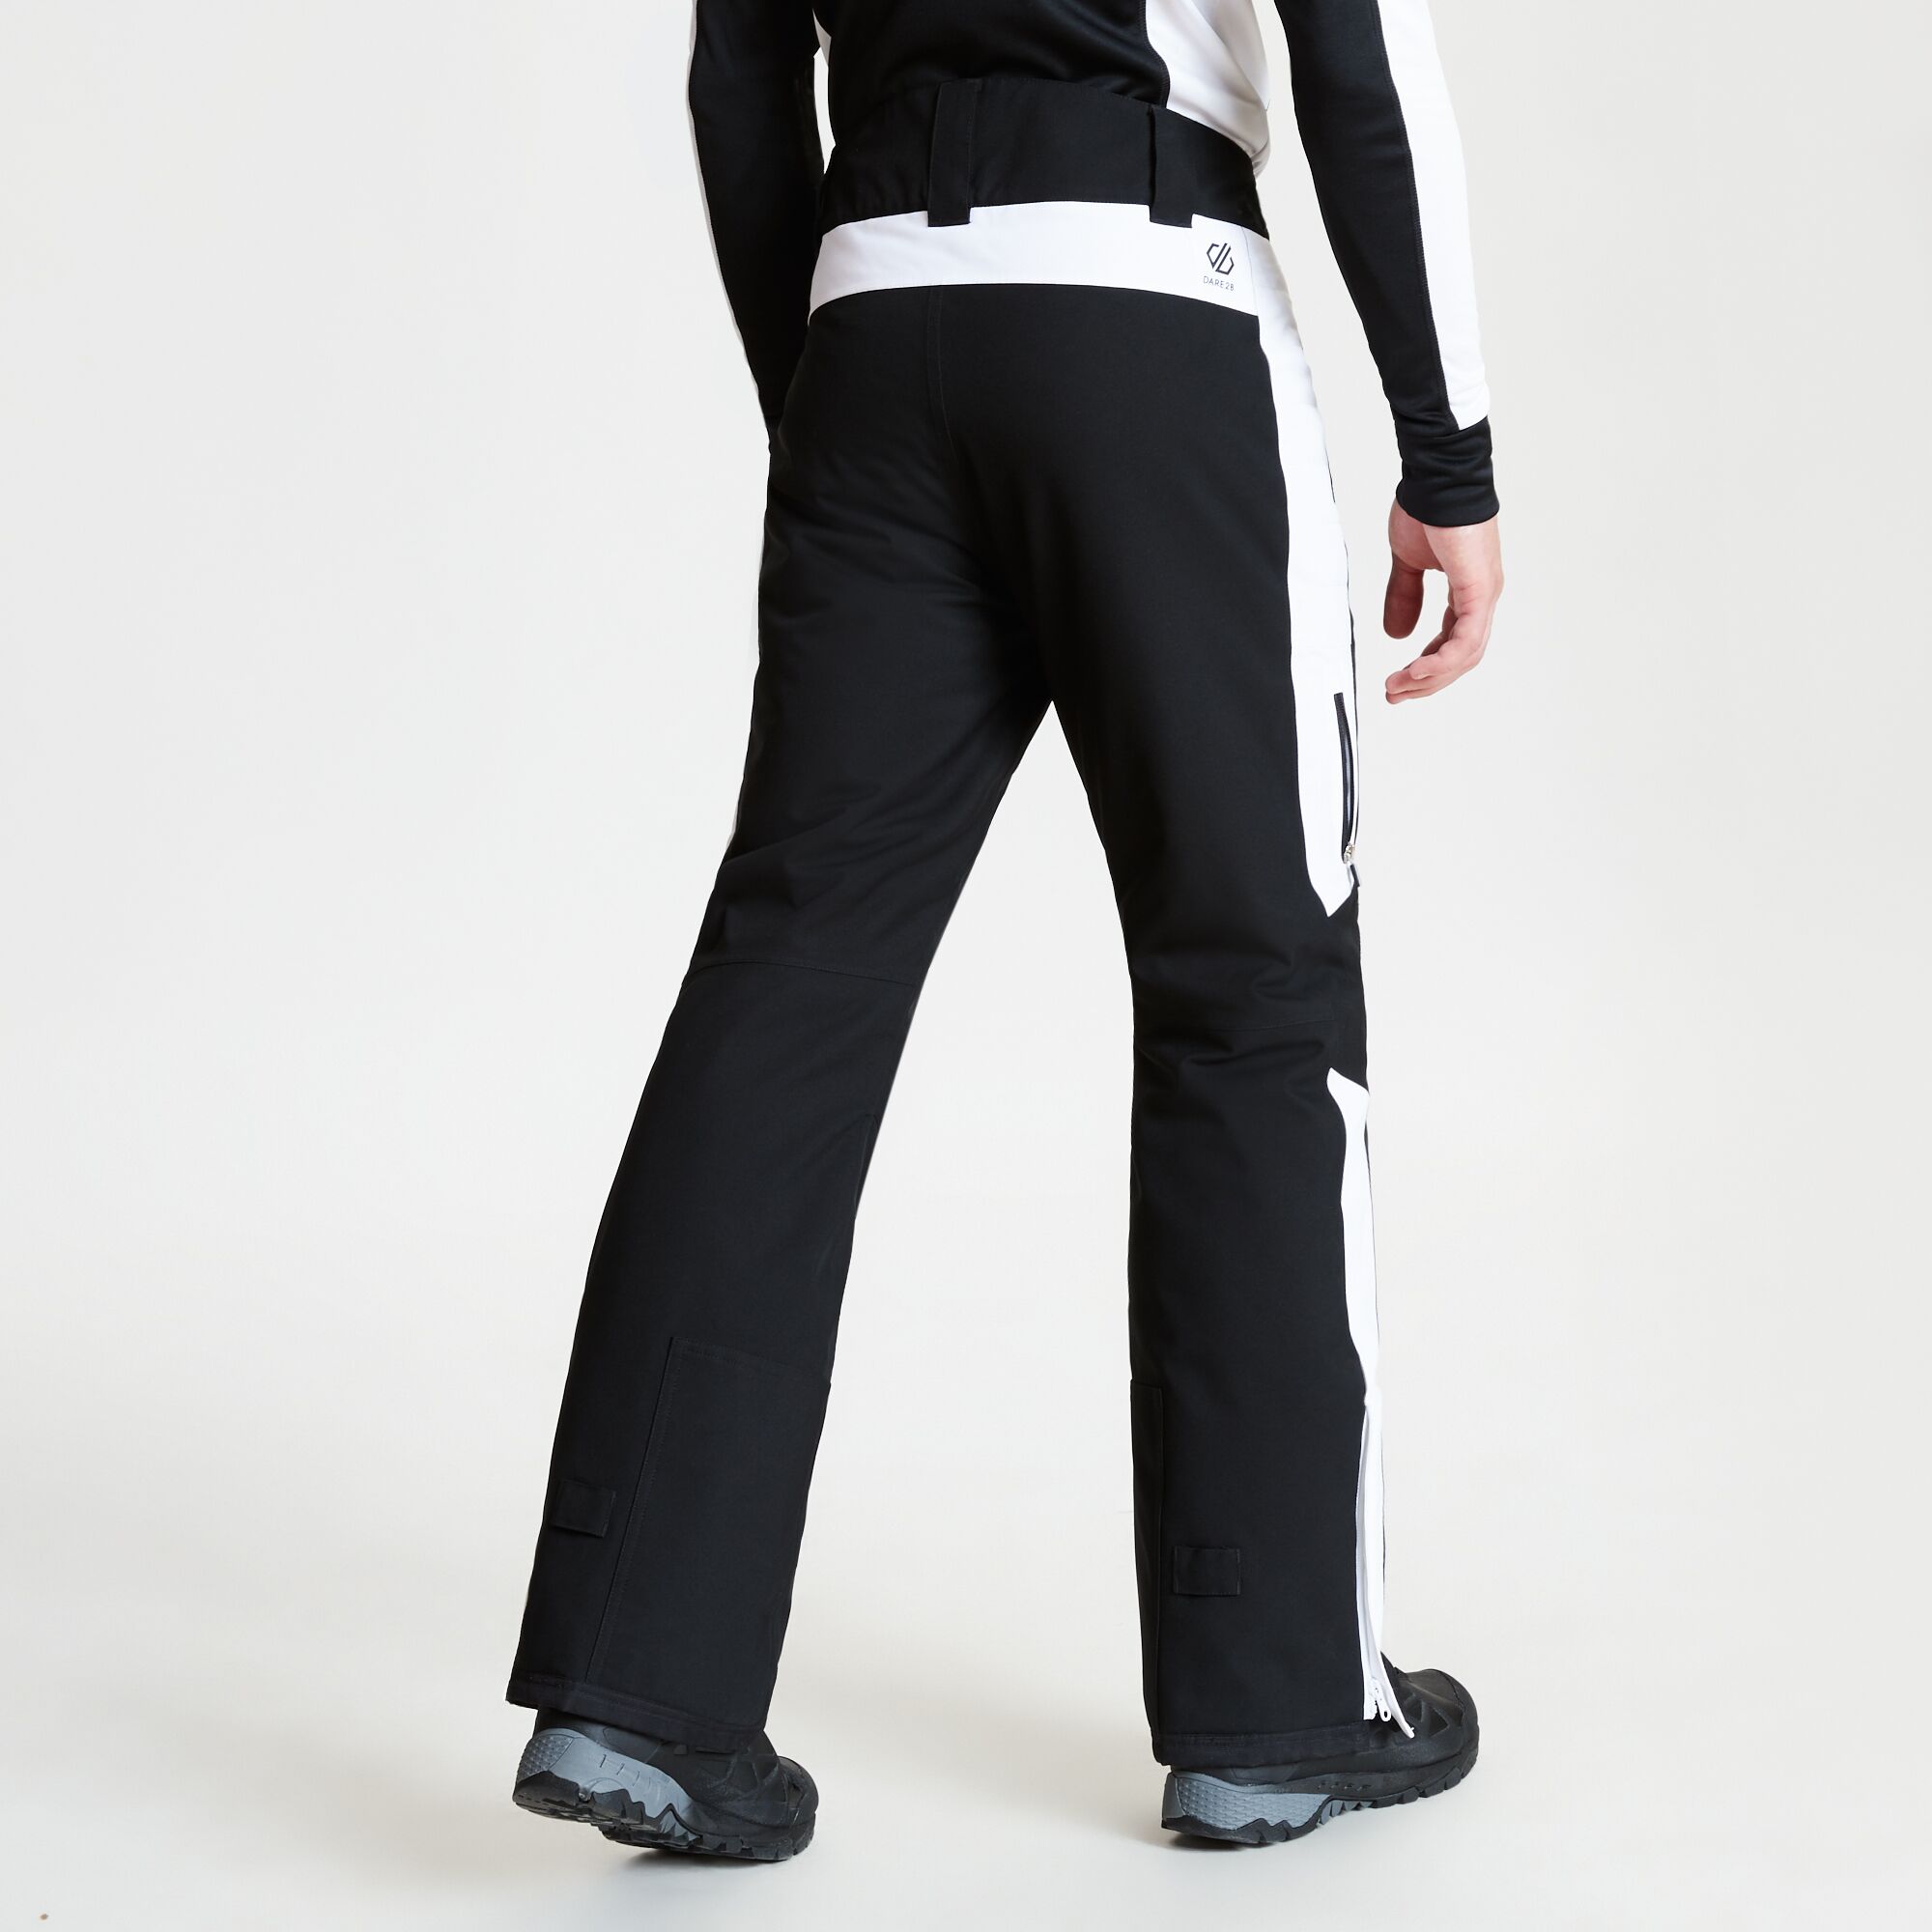 Discover more than 70 black ski pants super hot - in.eteachers